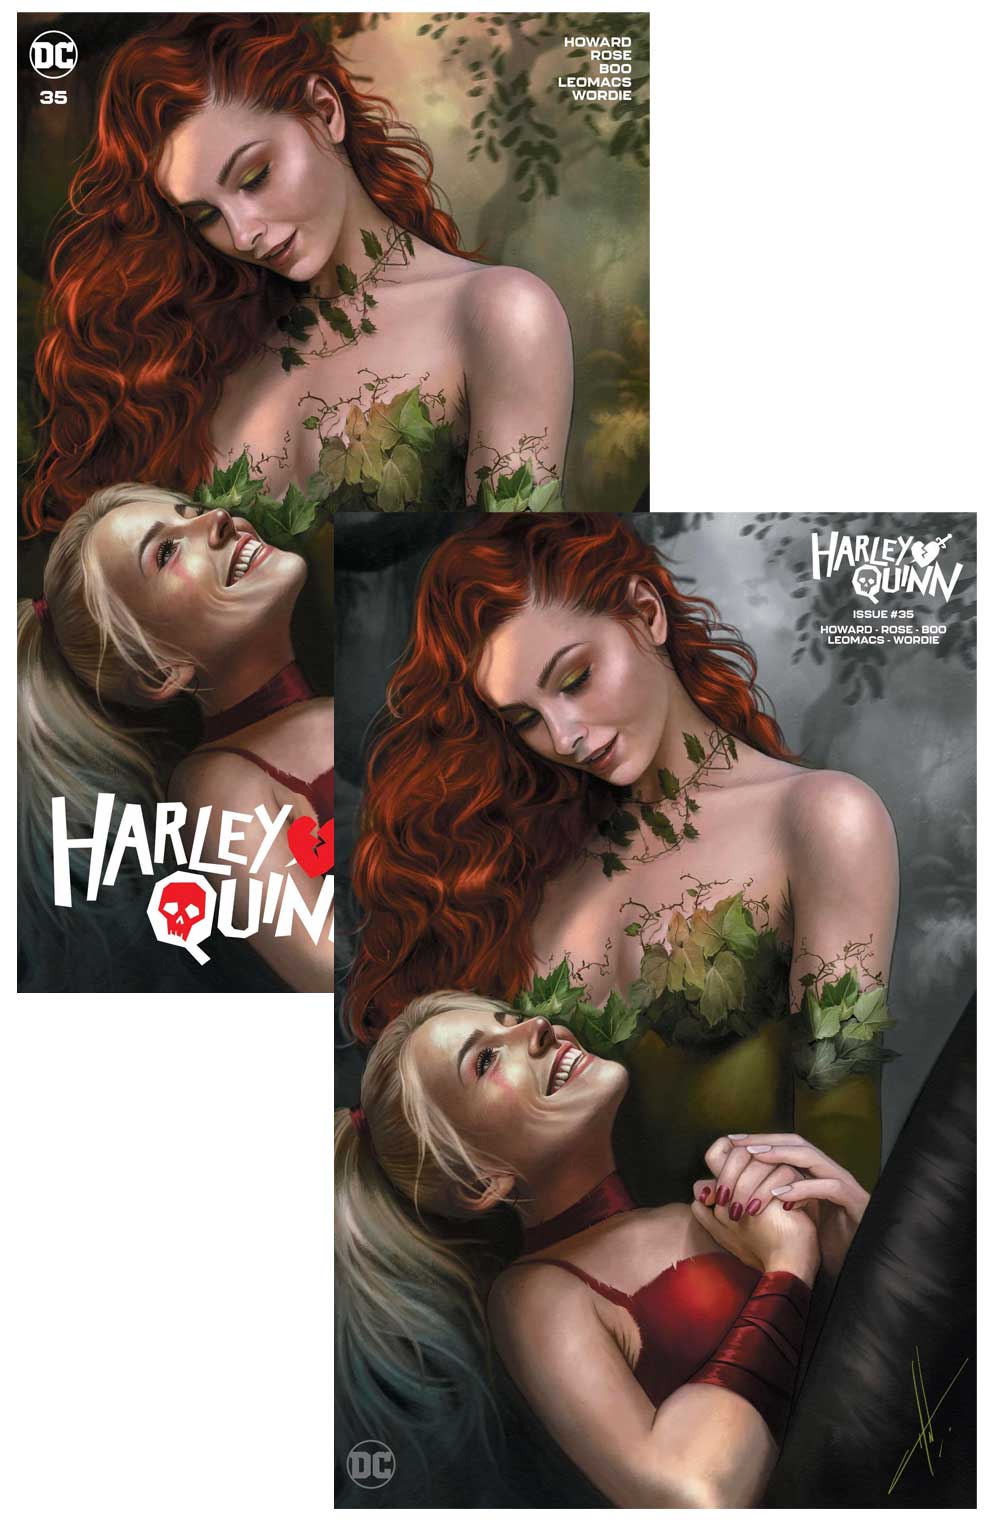 Harley Quinn #35 Carla Cohen Variant SET